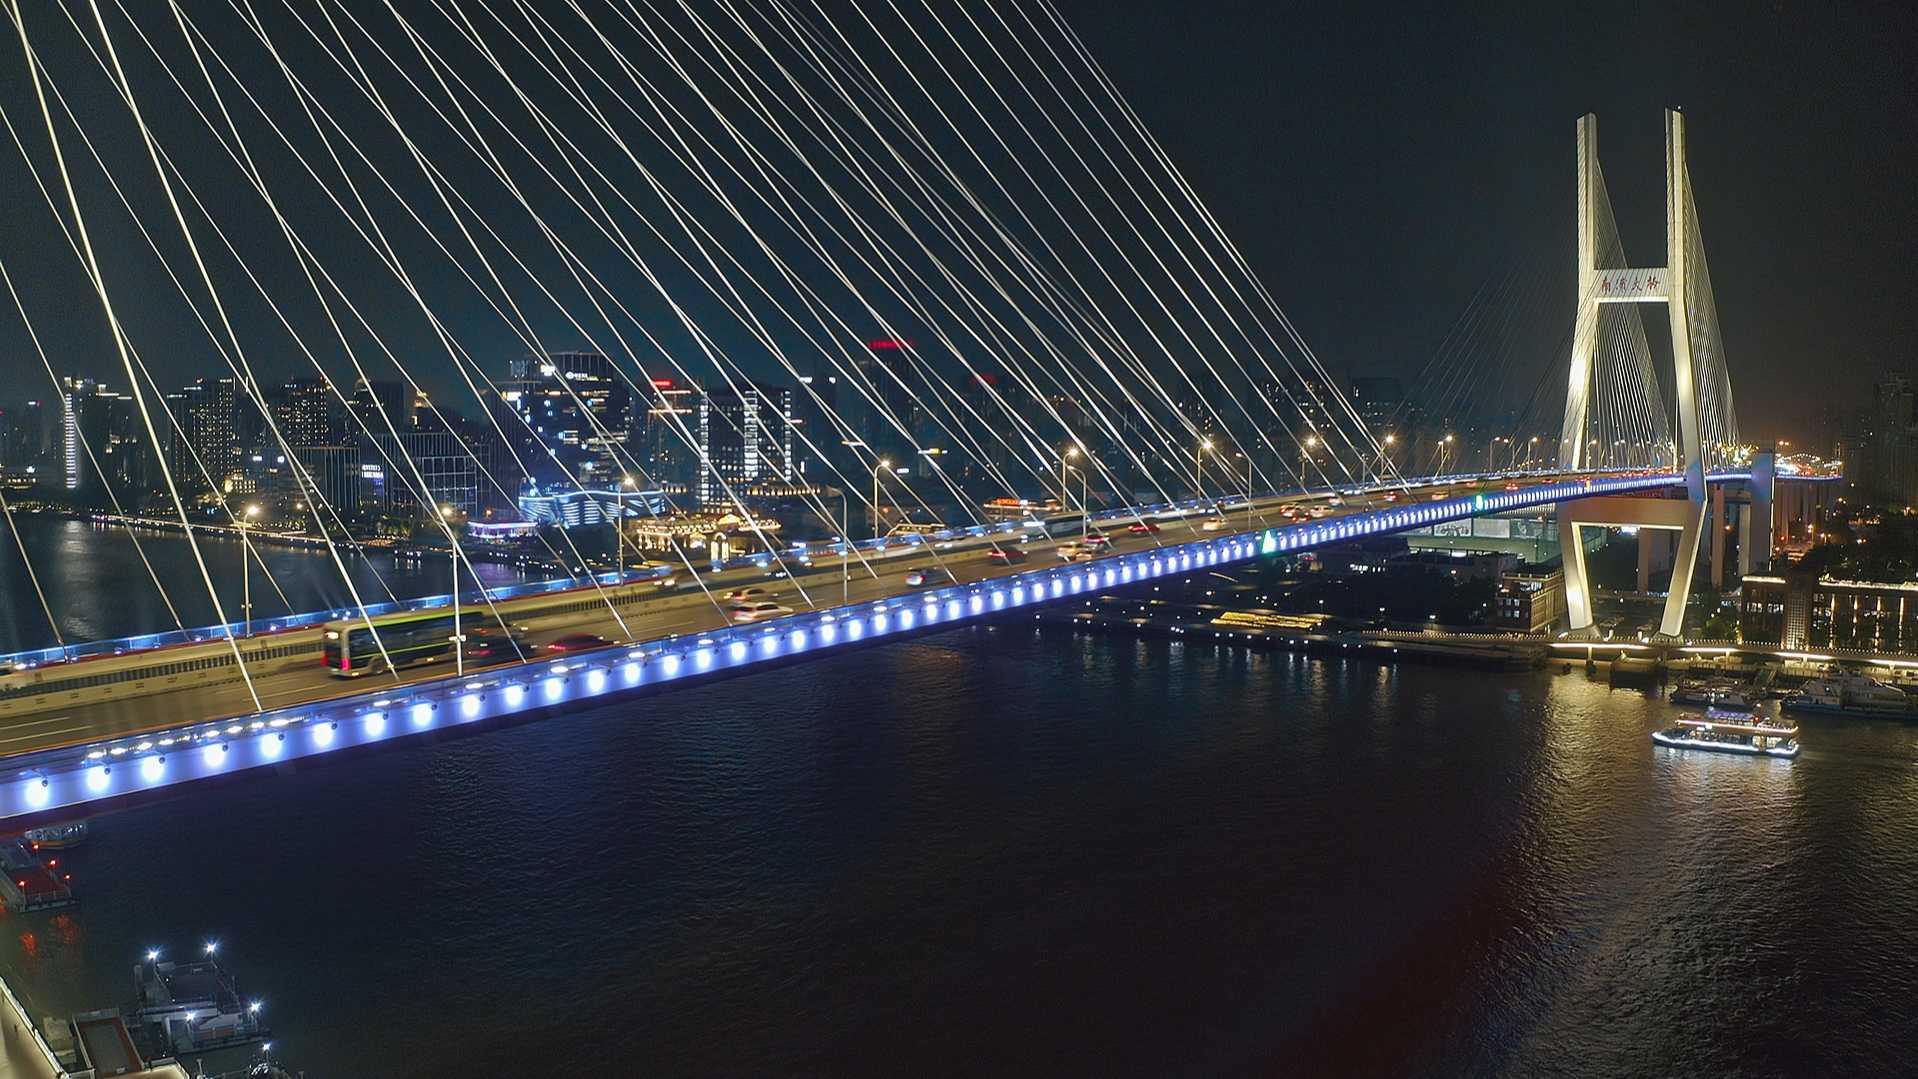 Nanpu bridge, Shanghai, 4K. 上海南浦大桥。